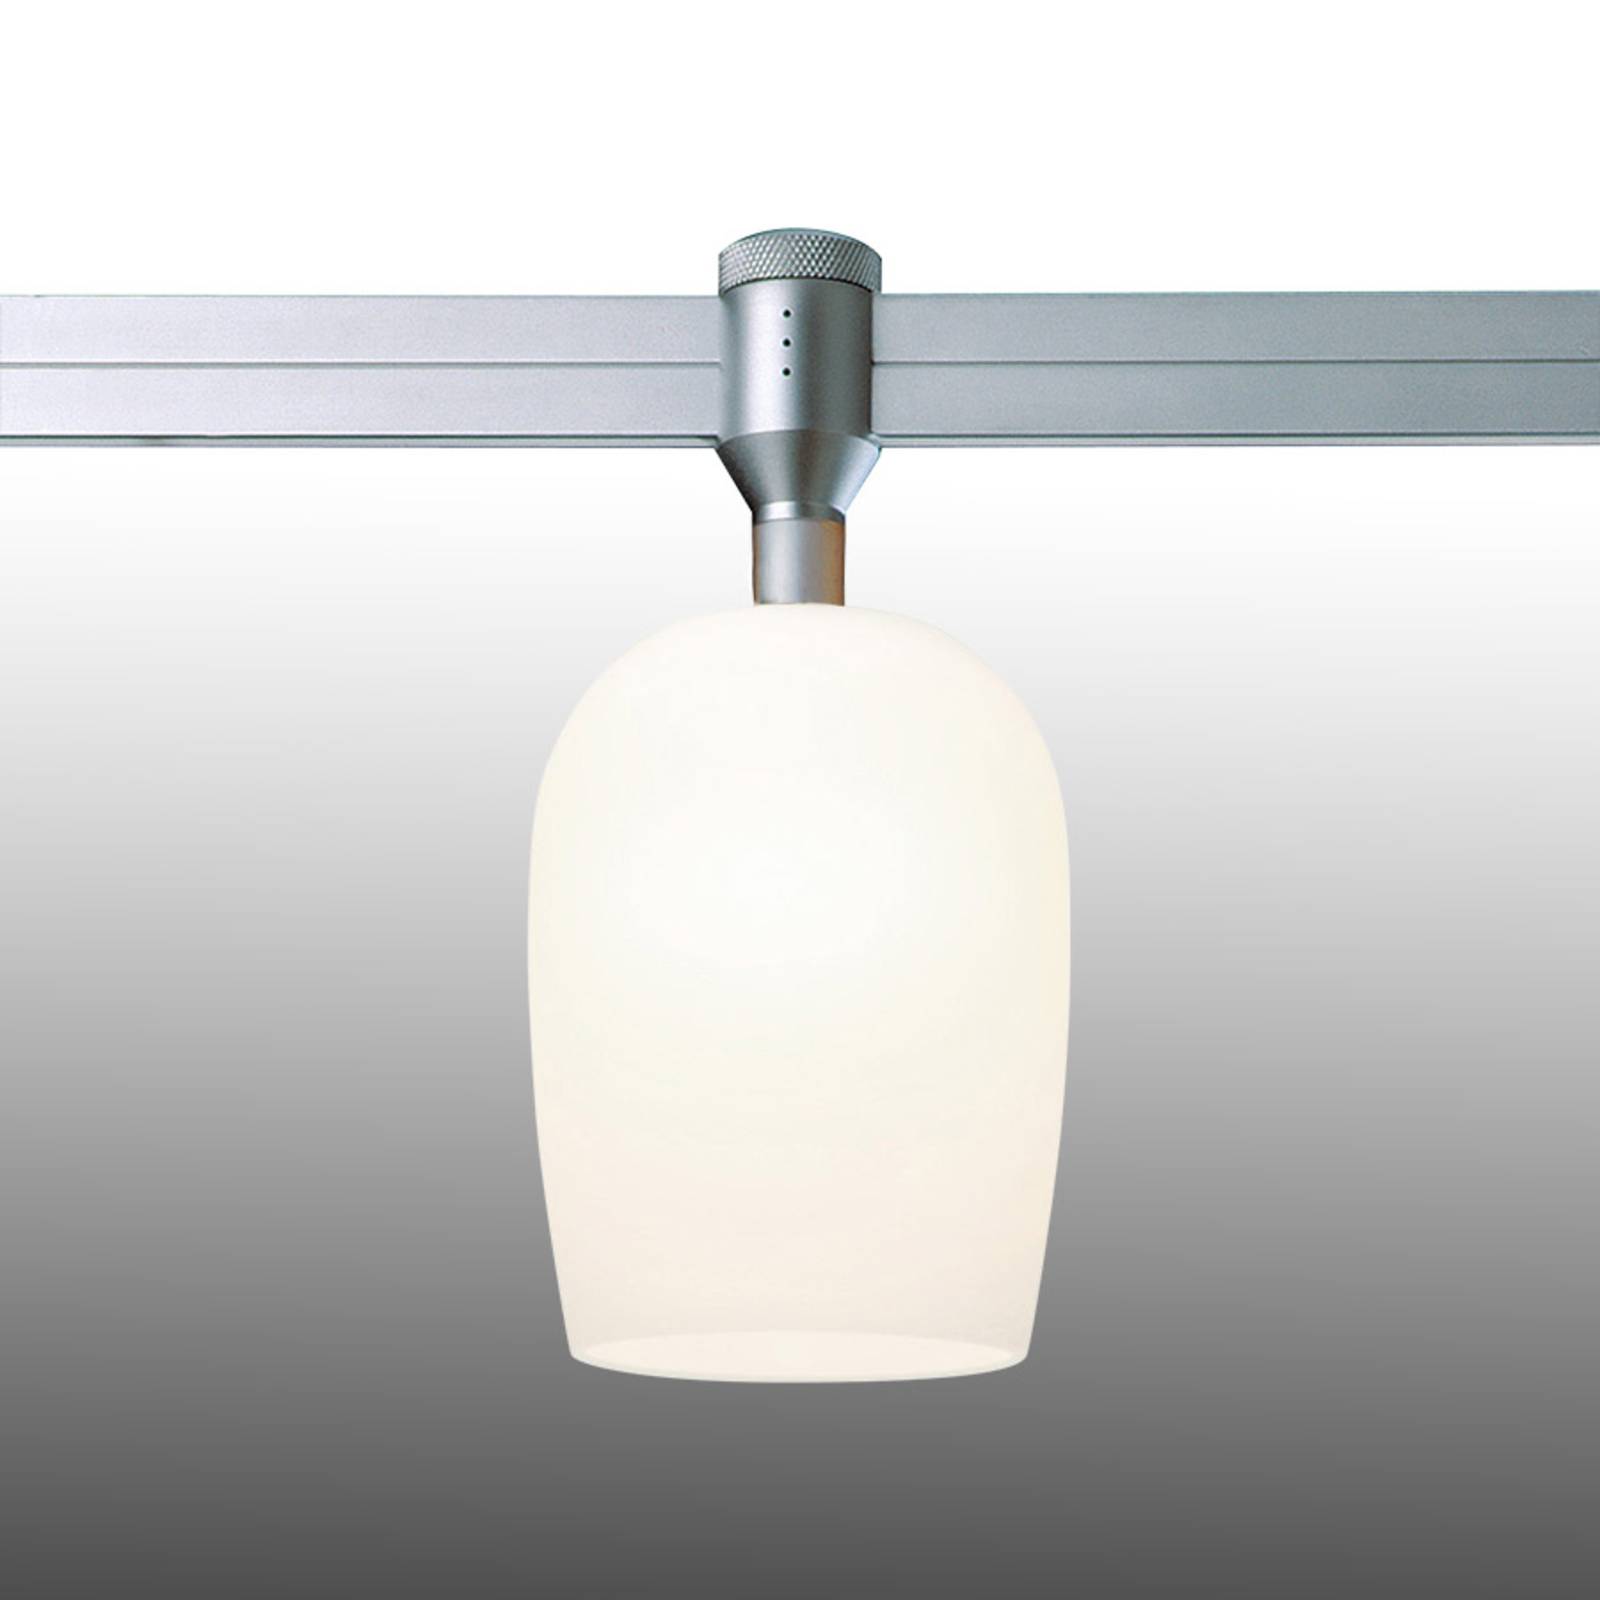 Image of Oligo Lampe Balibu pour rail CHECK-IN, blanc mat 4035162249246